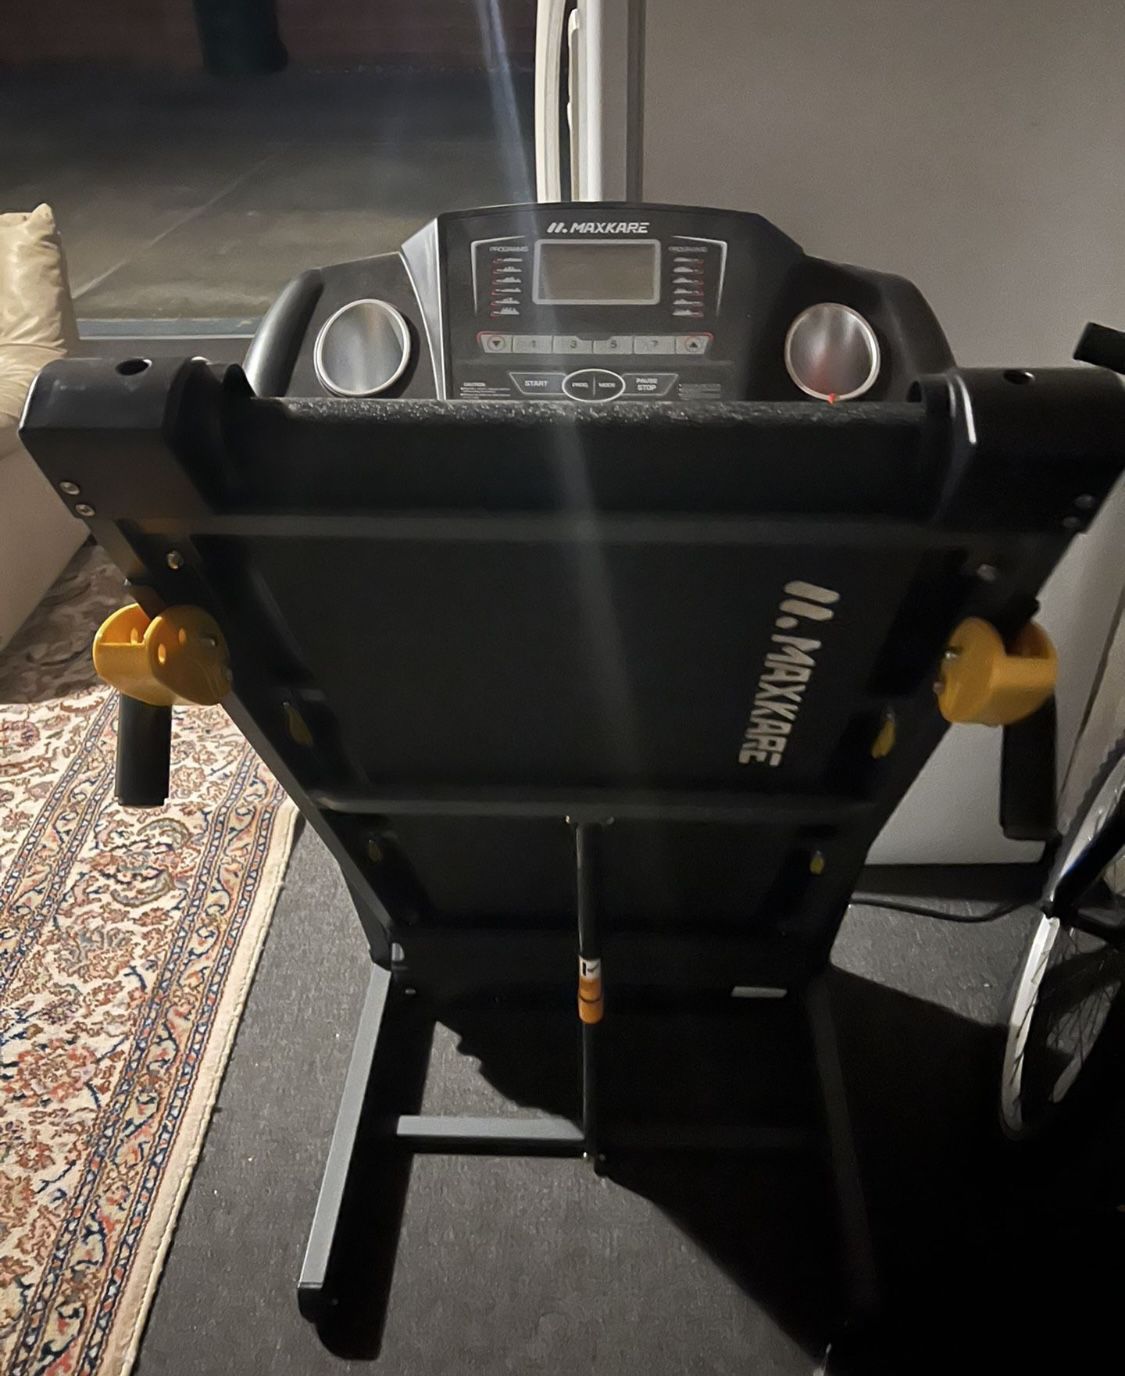 MaxCare Folding Electric Treadmill 